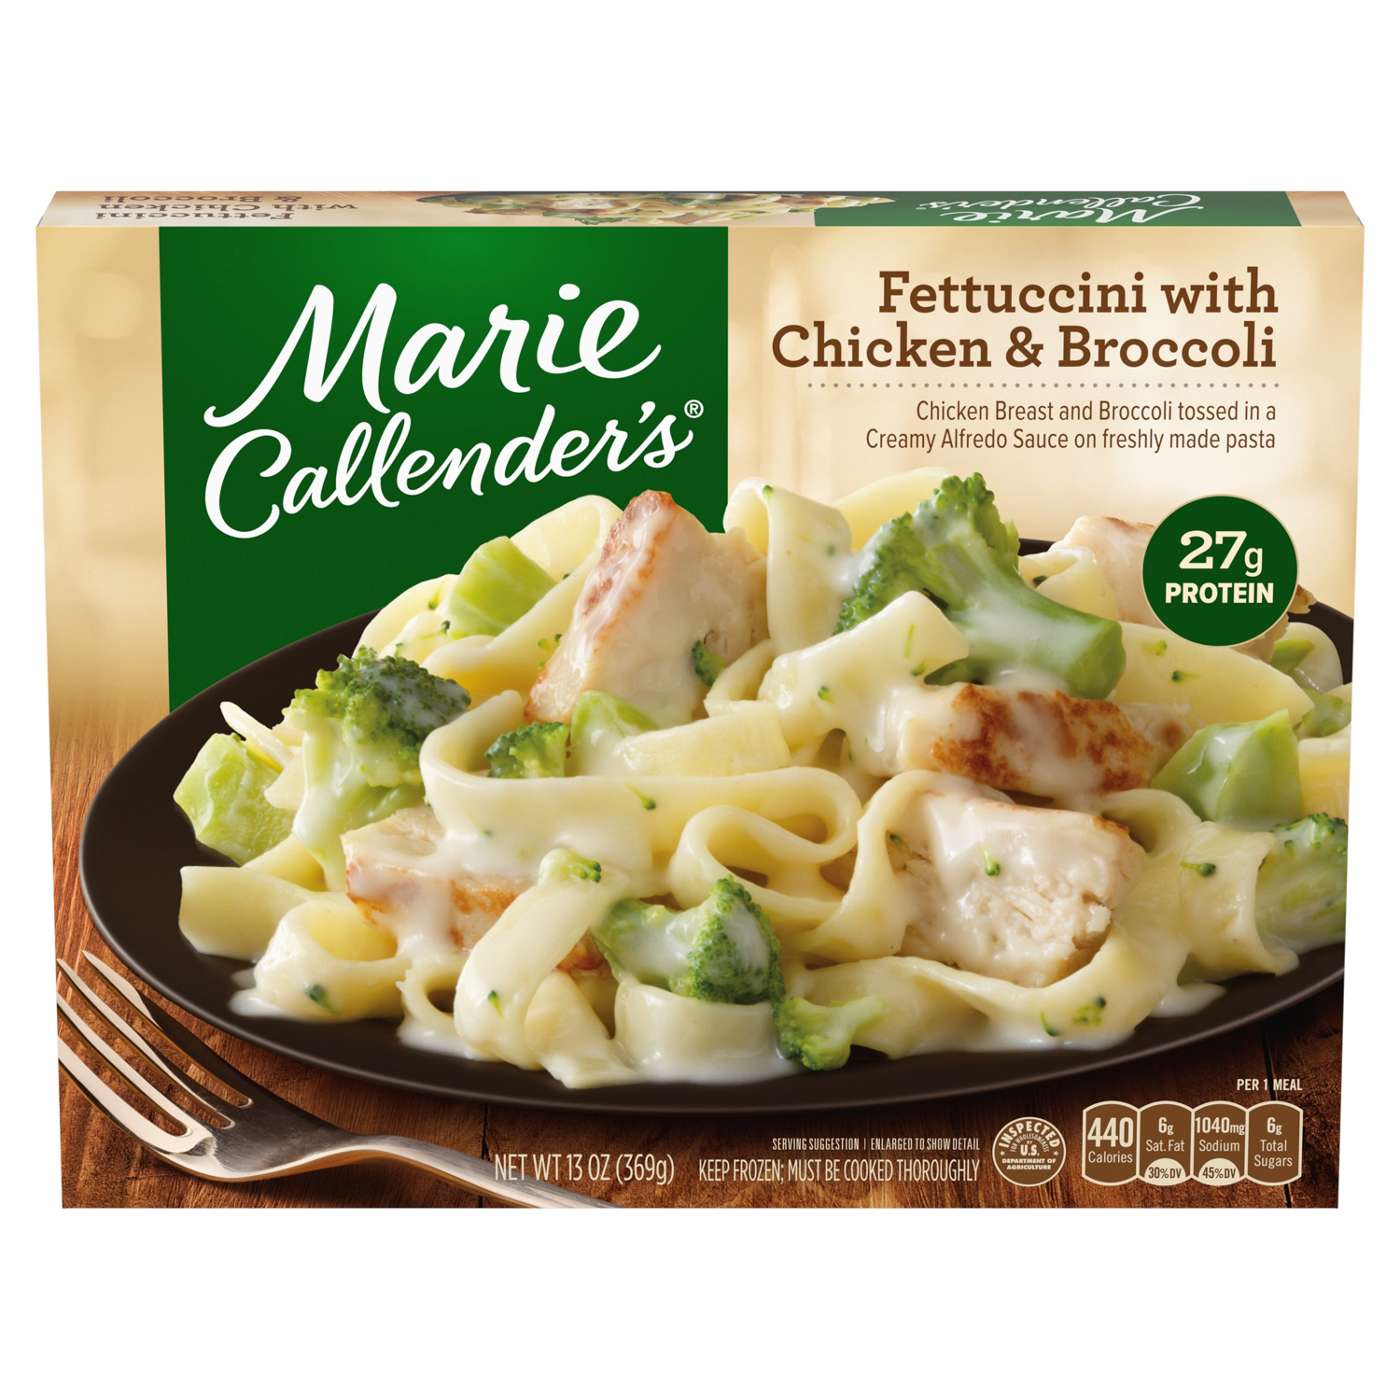 Marie Callender's Chicken & Broccoli Fettuccini Frozen Meal; image 1 of 4